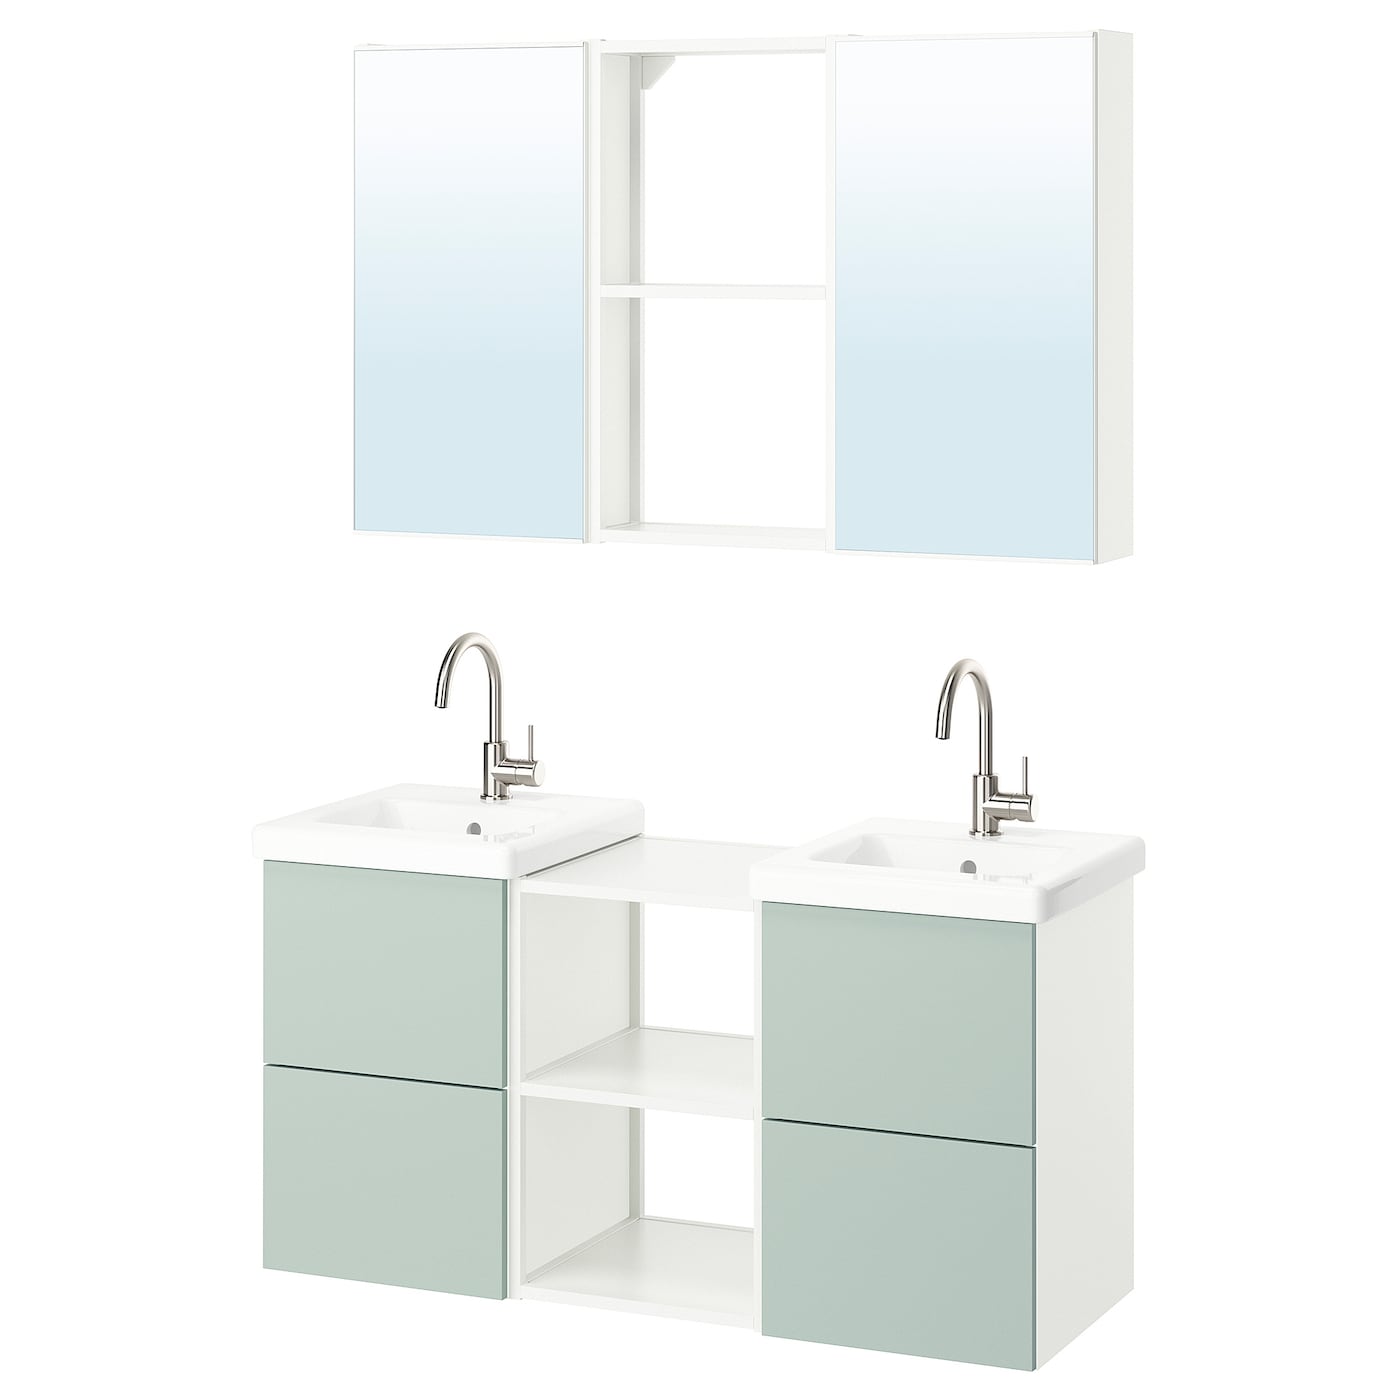 Комбинация для ванной - IKEA ENHET, 124х43х65 см, белый/серо-зеленый, ЭНХЕТ ИКЕА